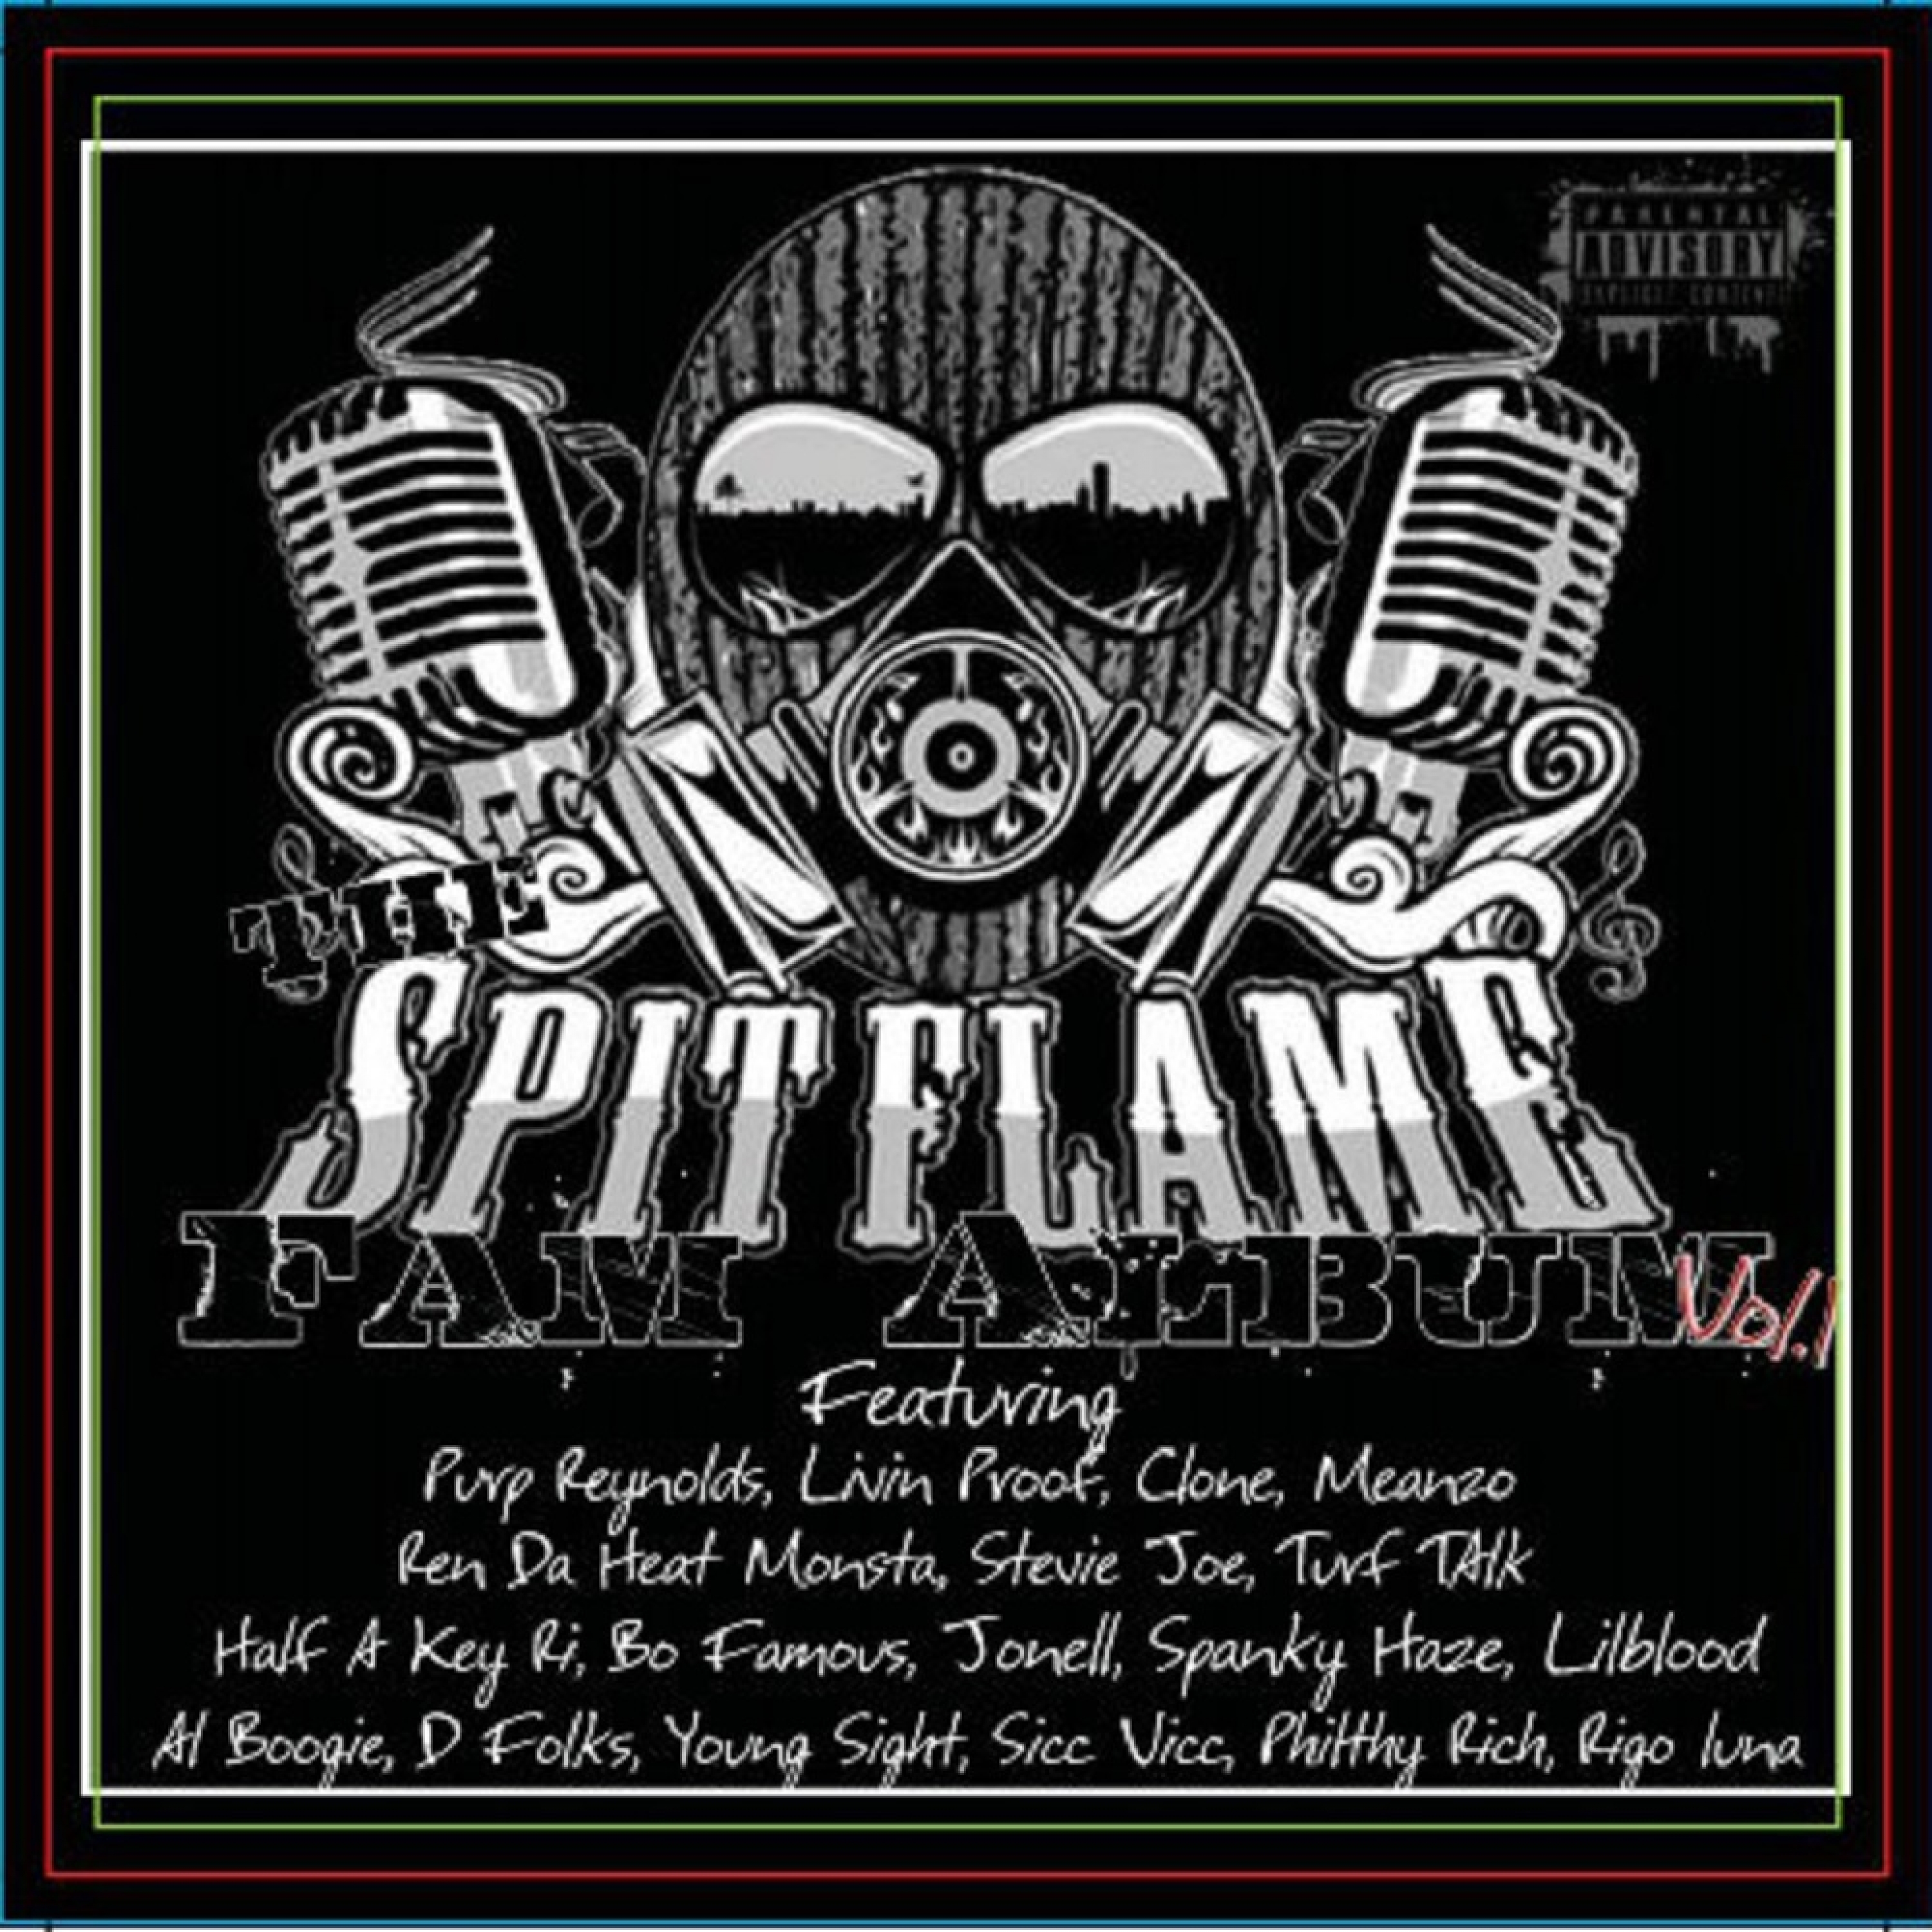 Tha Spitflame Fam Album, Vol. 1